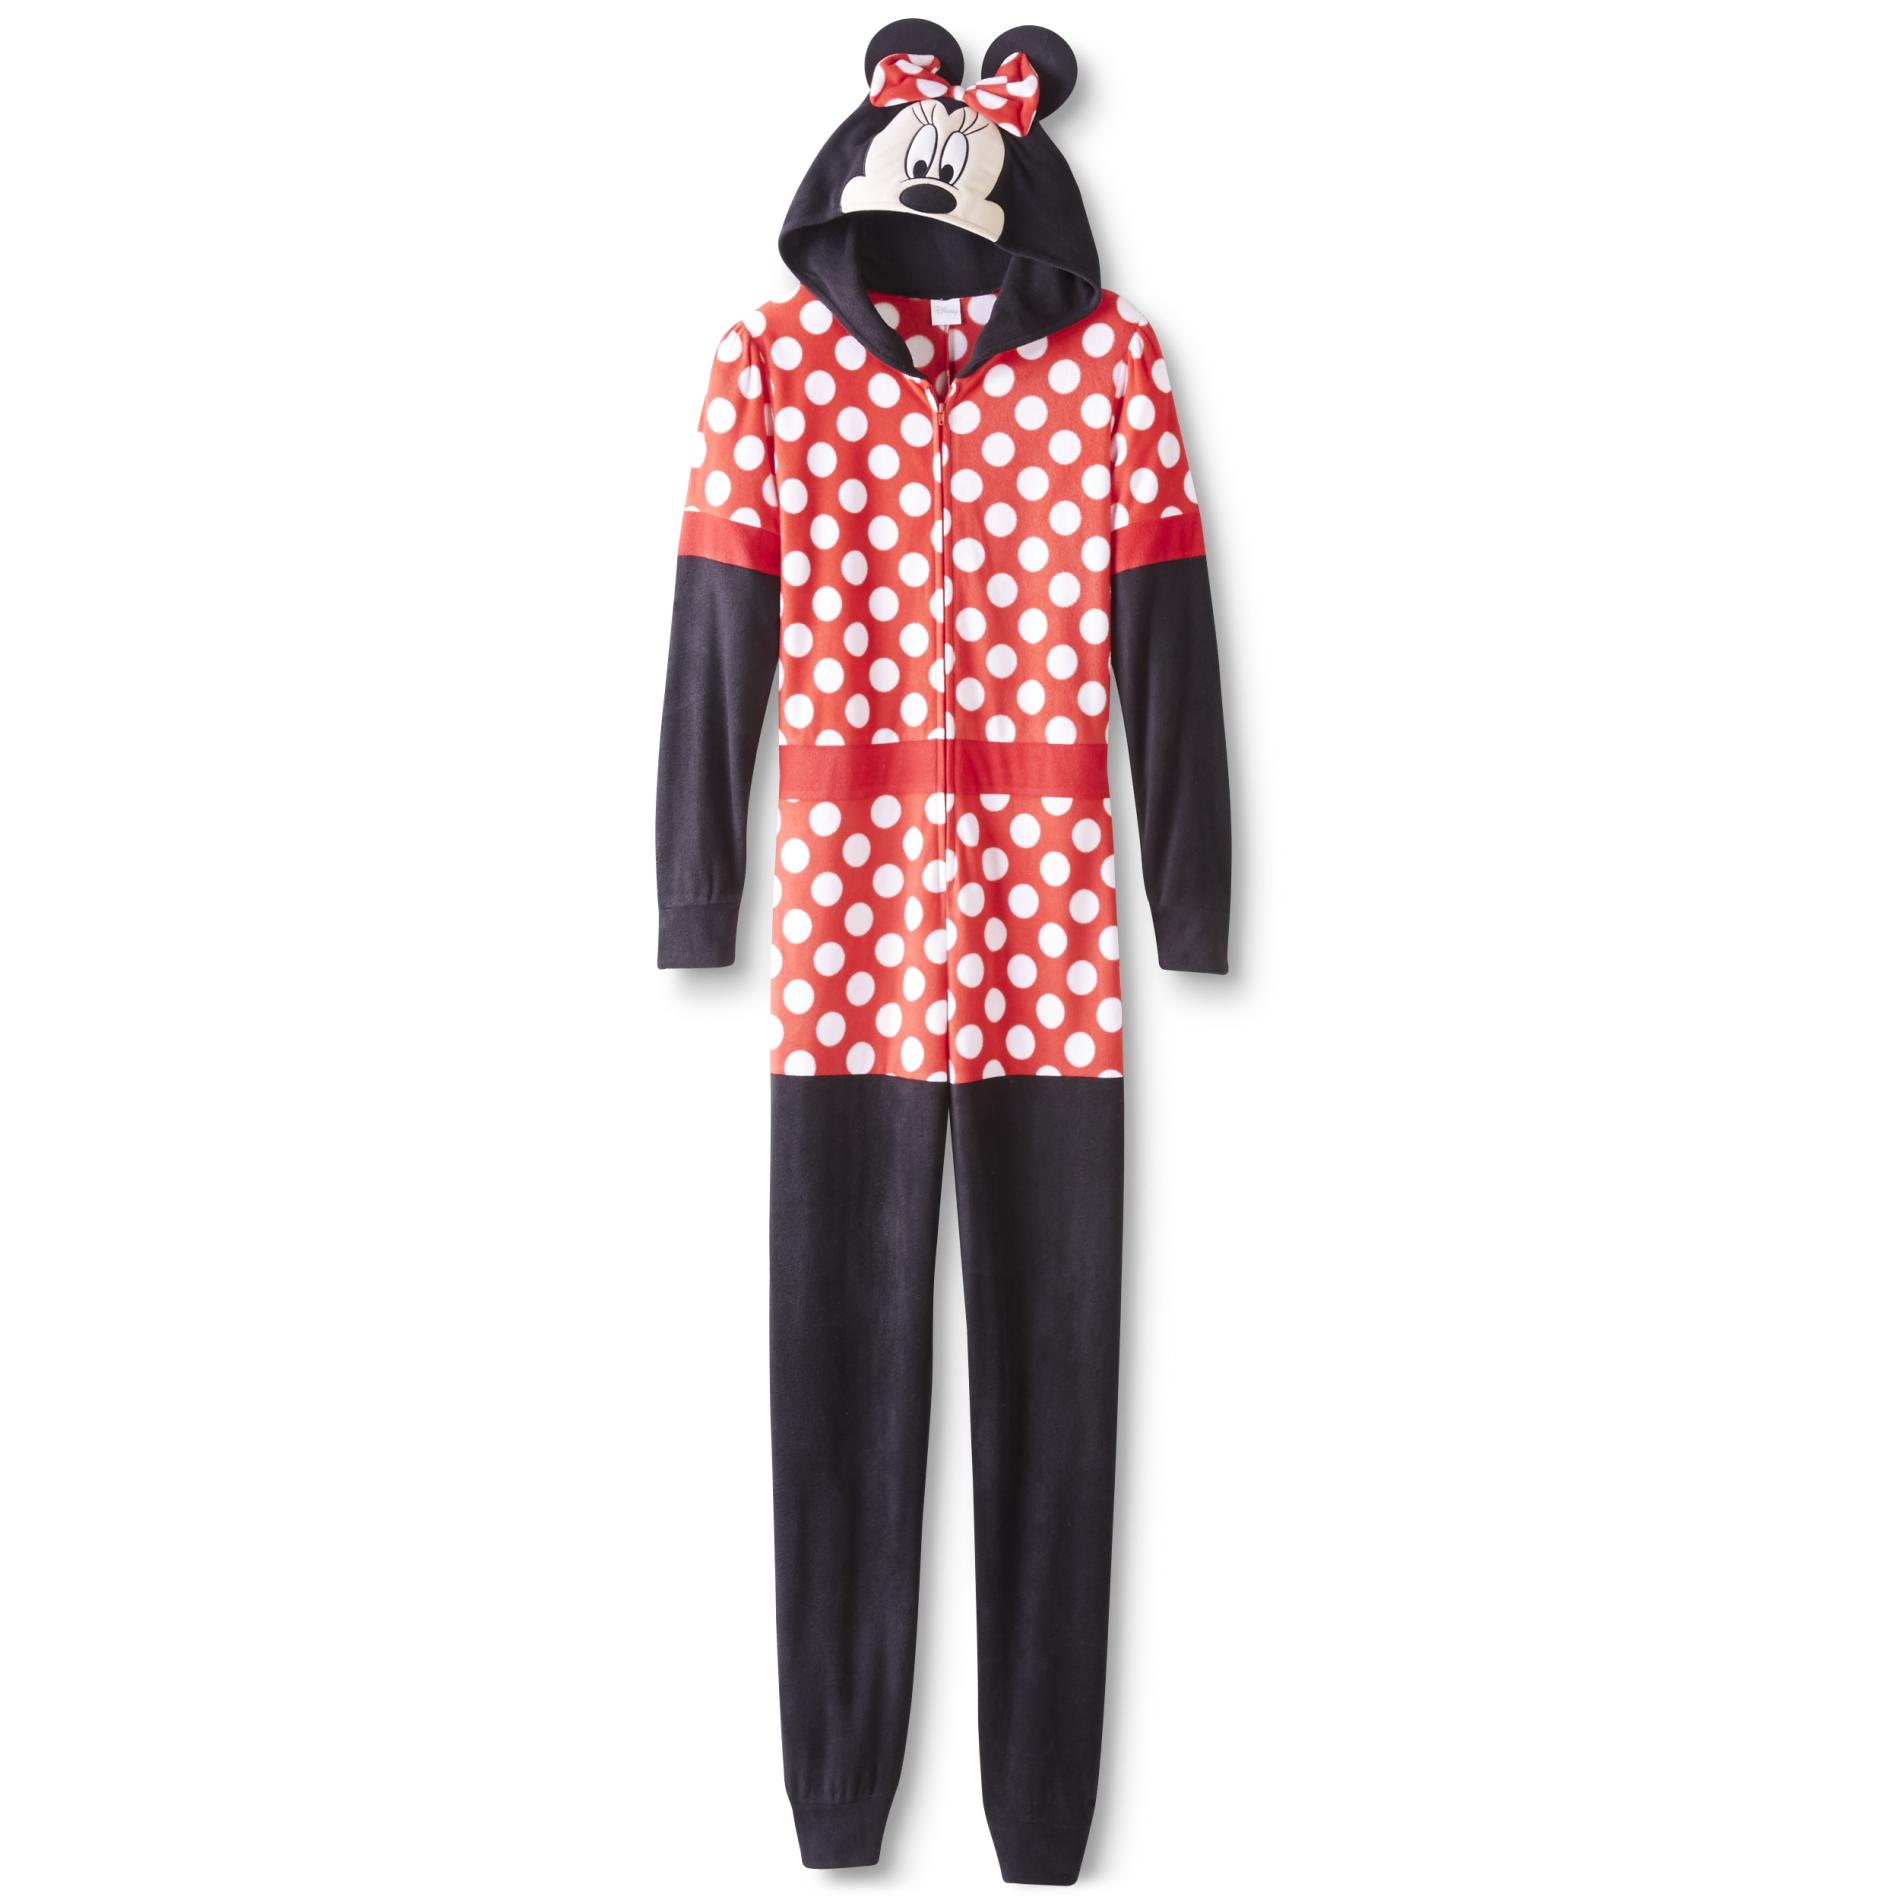 Disney Minnie Mouse Women's One-Piece Pajamas - Polka Dot